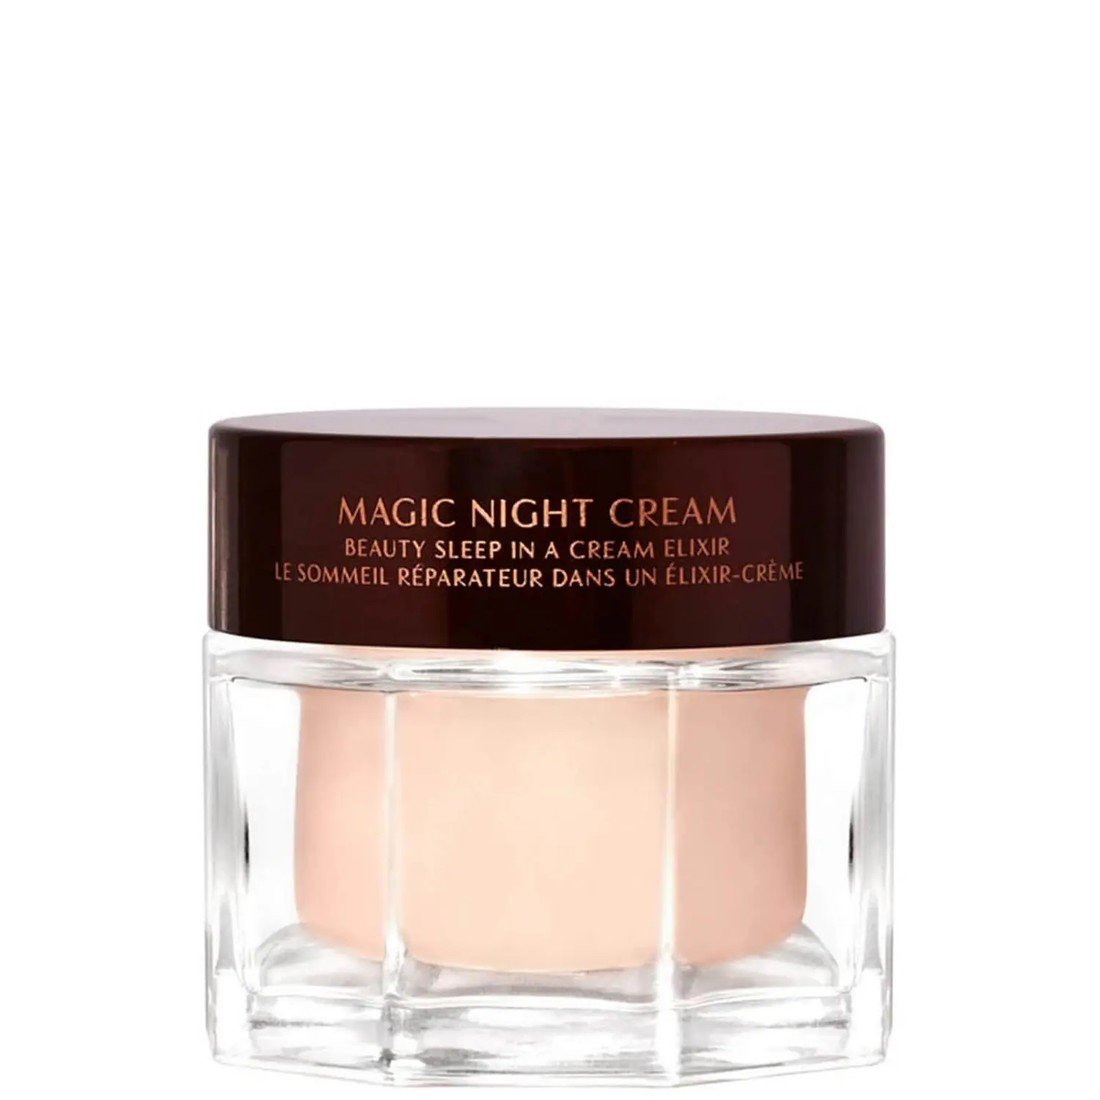 Charlotte Tilbury Noční pleťový krém (Magic Night Cream) 50 ml